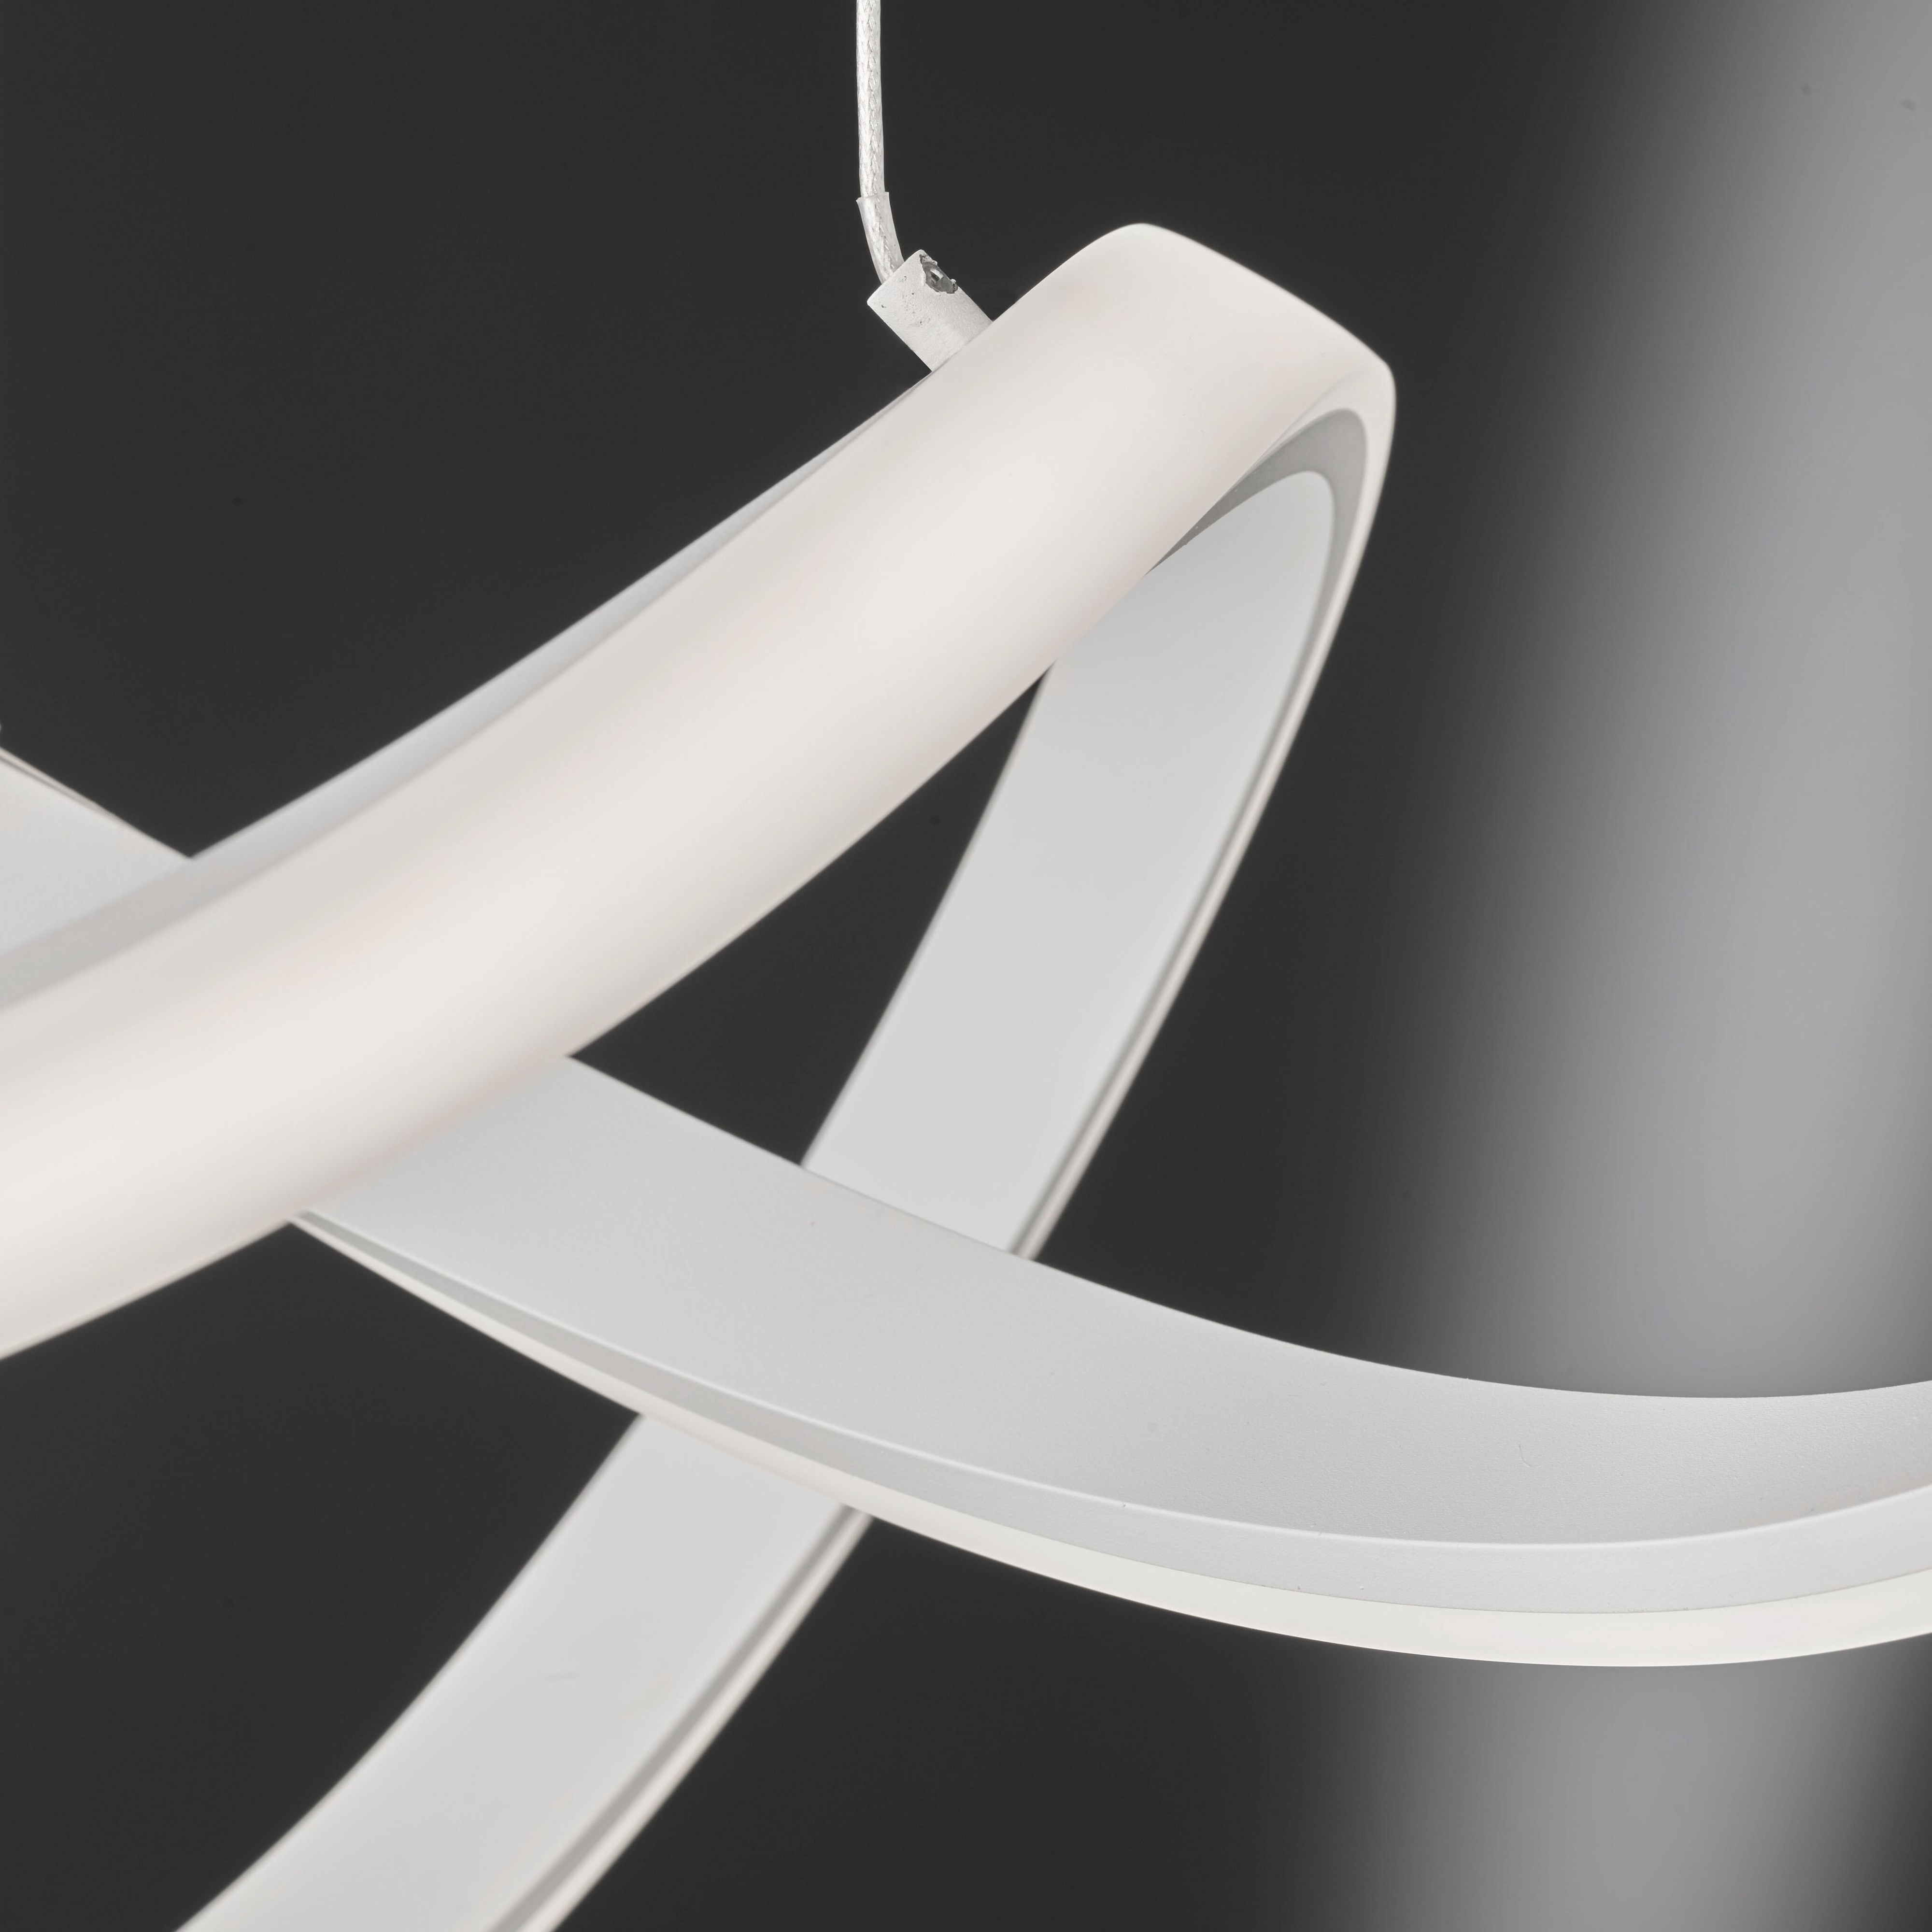 Lampadario Moderno Indigo bianco, in metallo, L. 55 cm, WOFI - 3